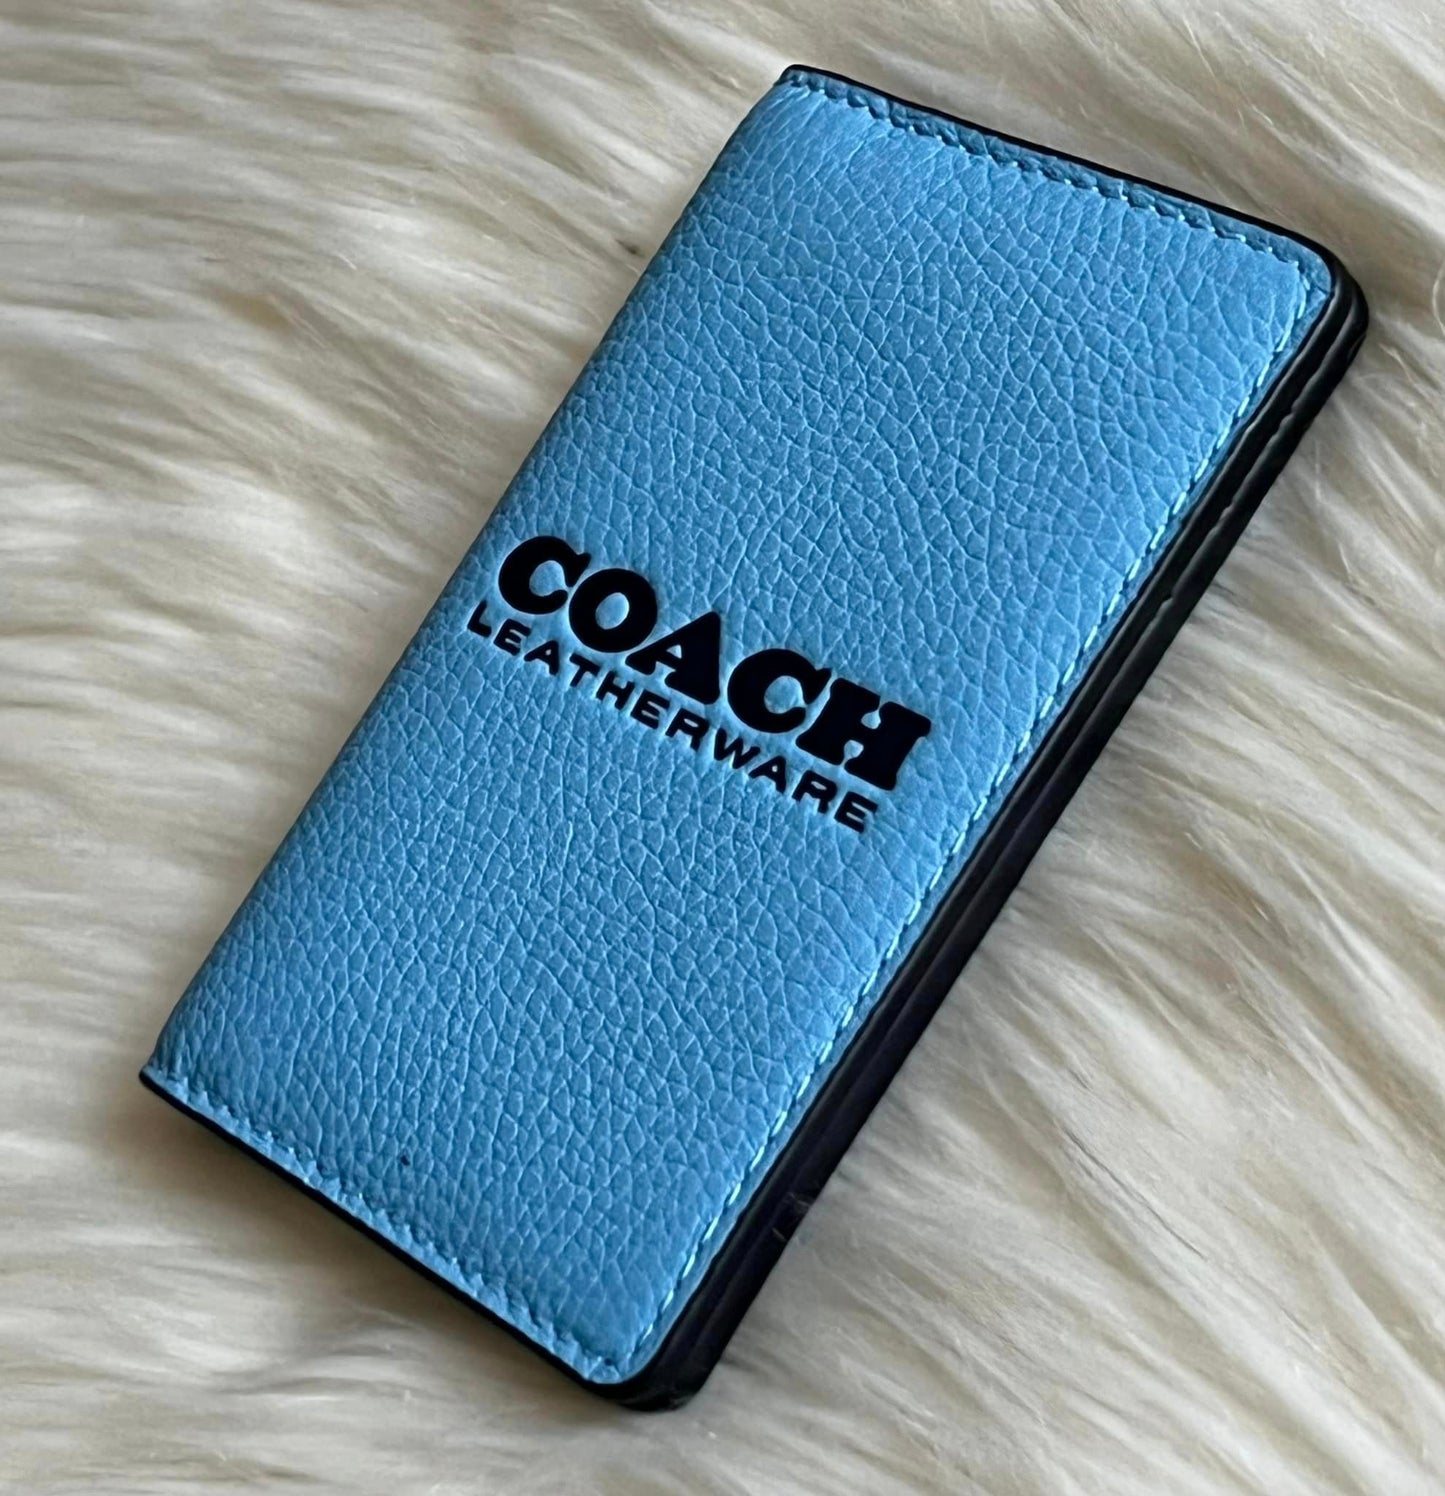 Coach Card Wallet